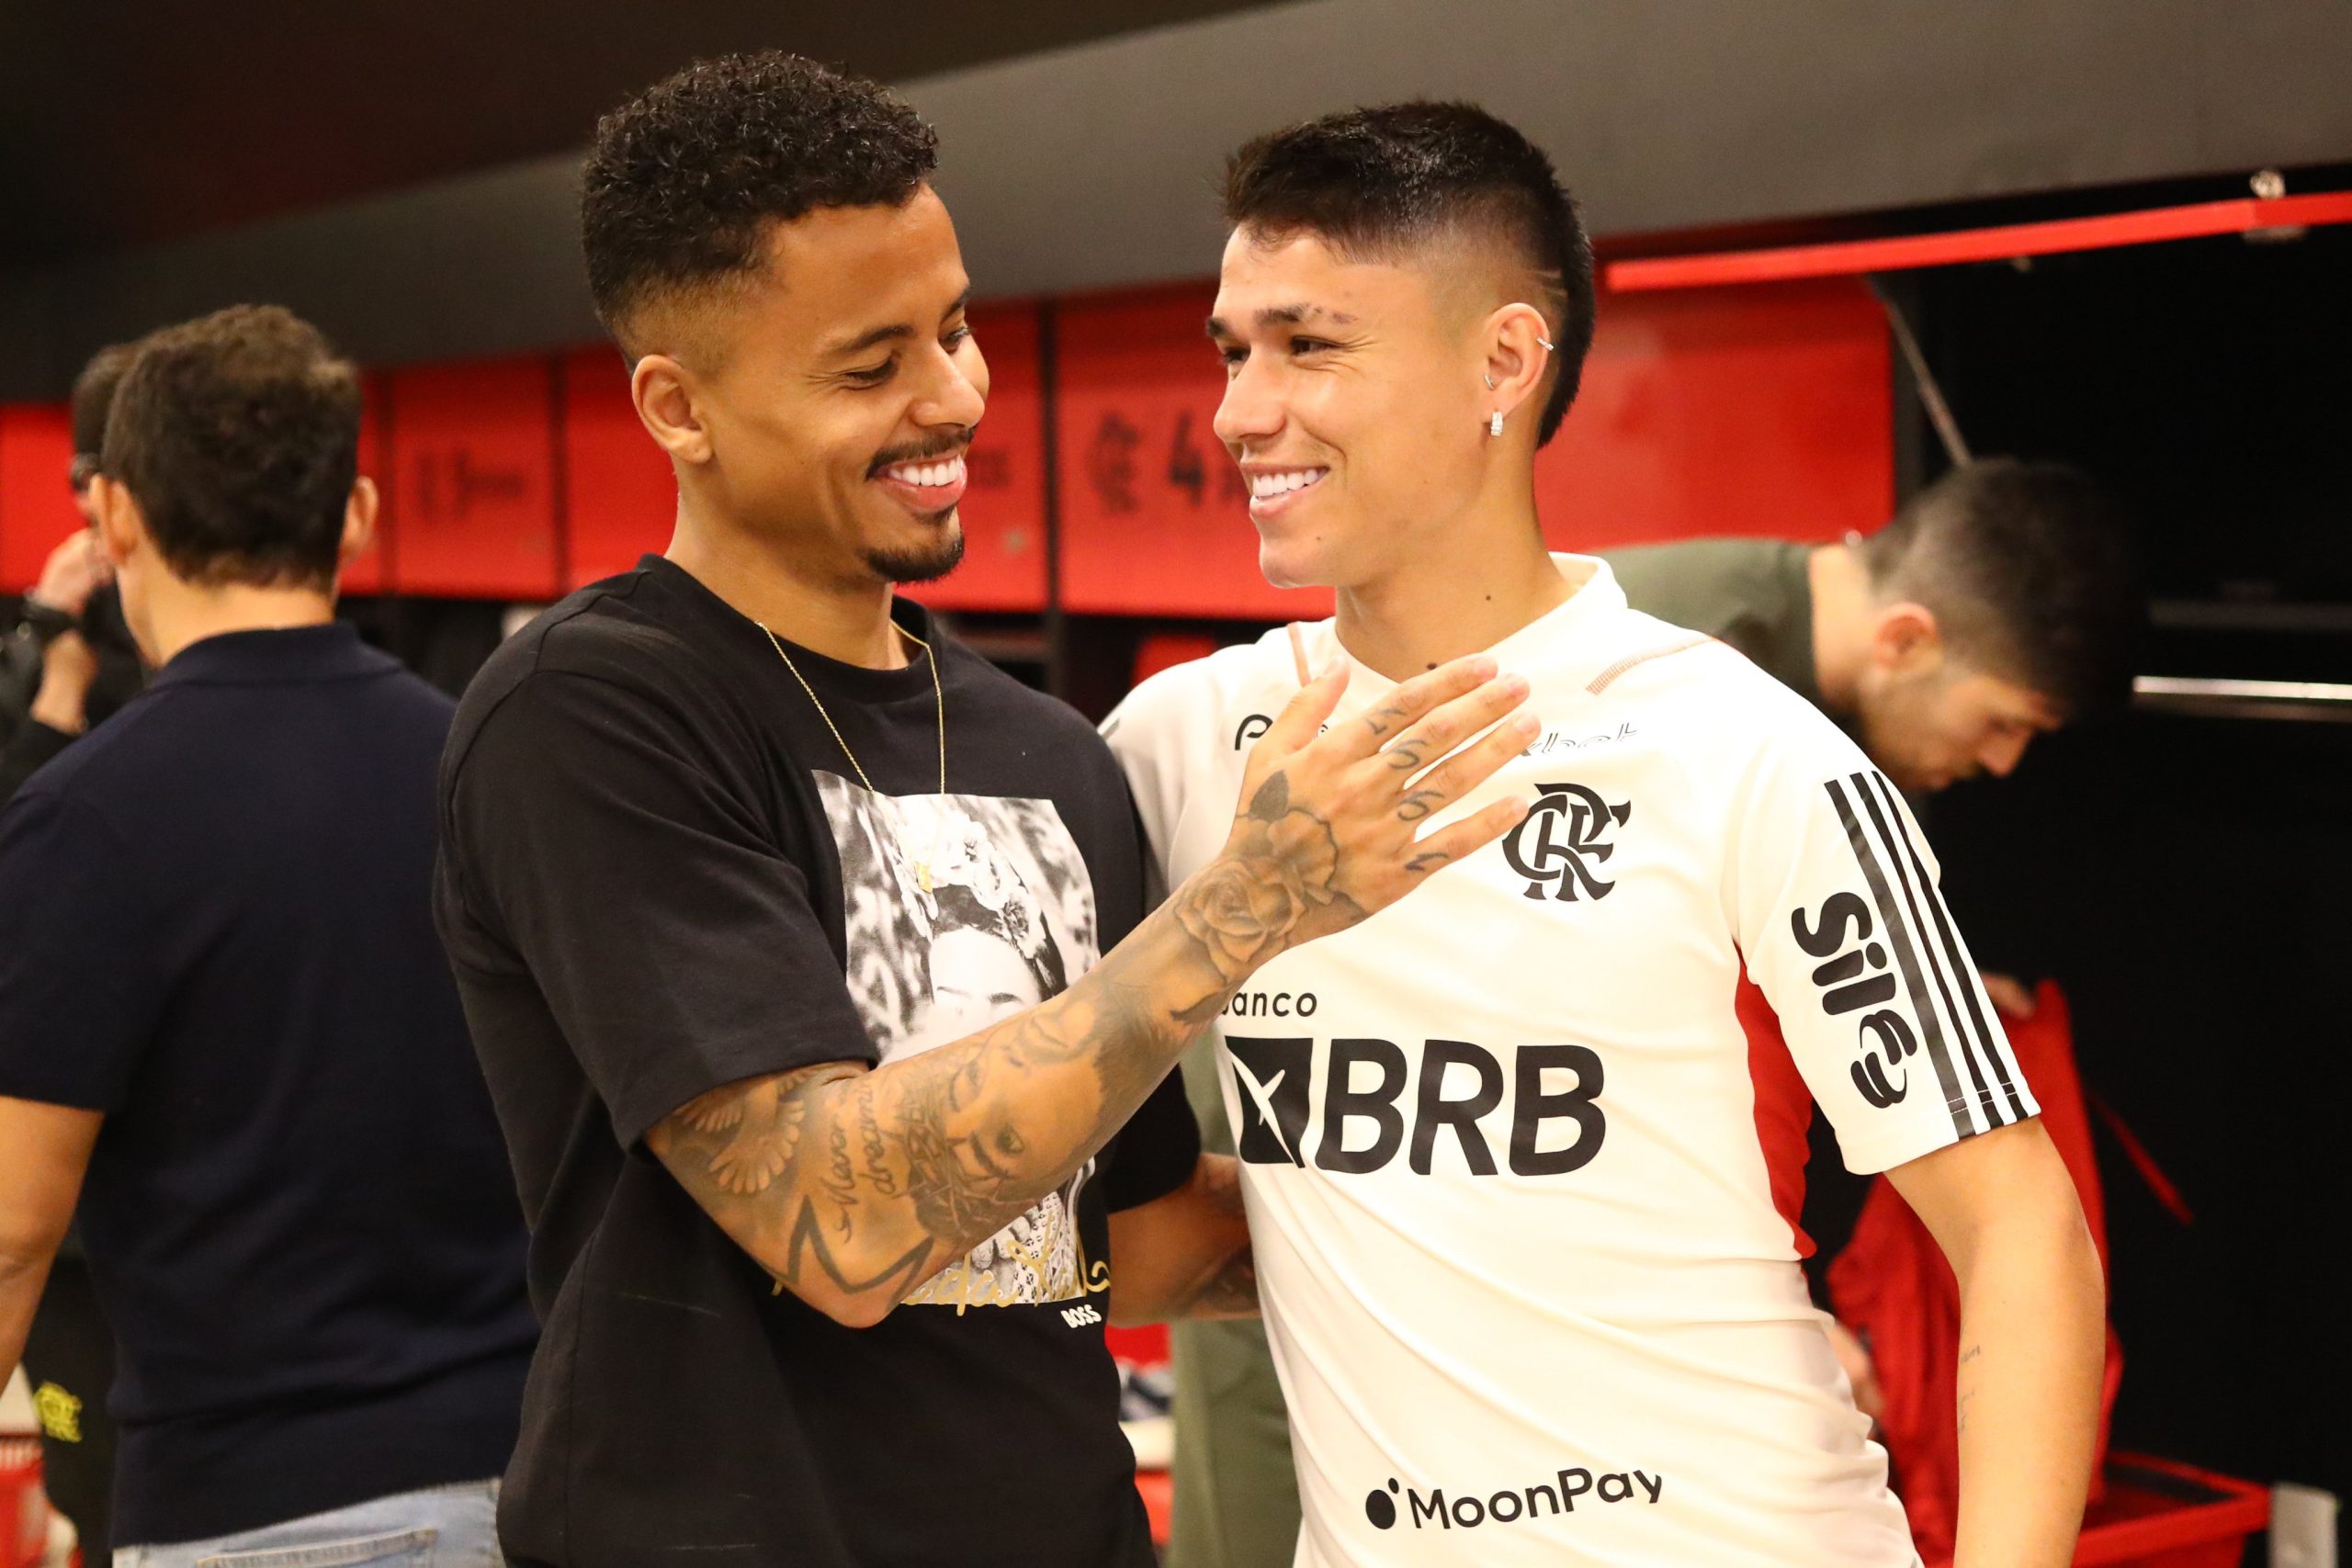 Allan e Luiz Araújo se cumprimentando no Ninho do Urubu (Foto: Gilvan de Souza /Flamengo)